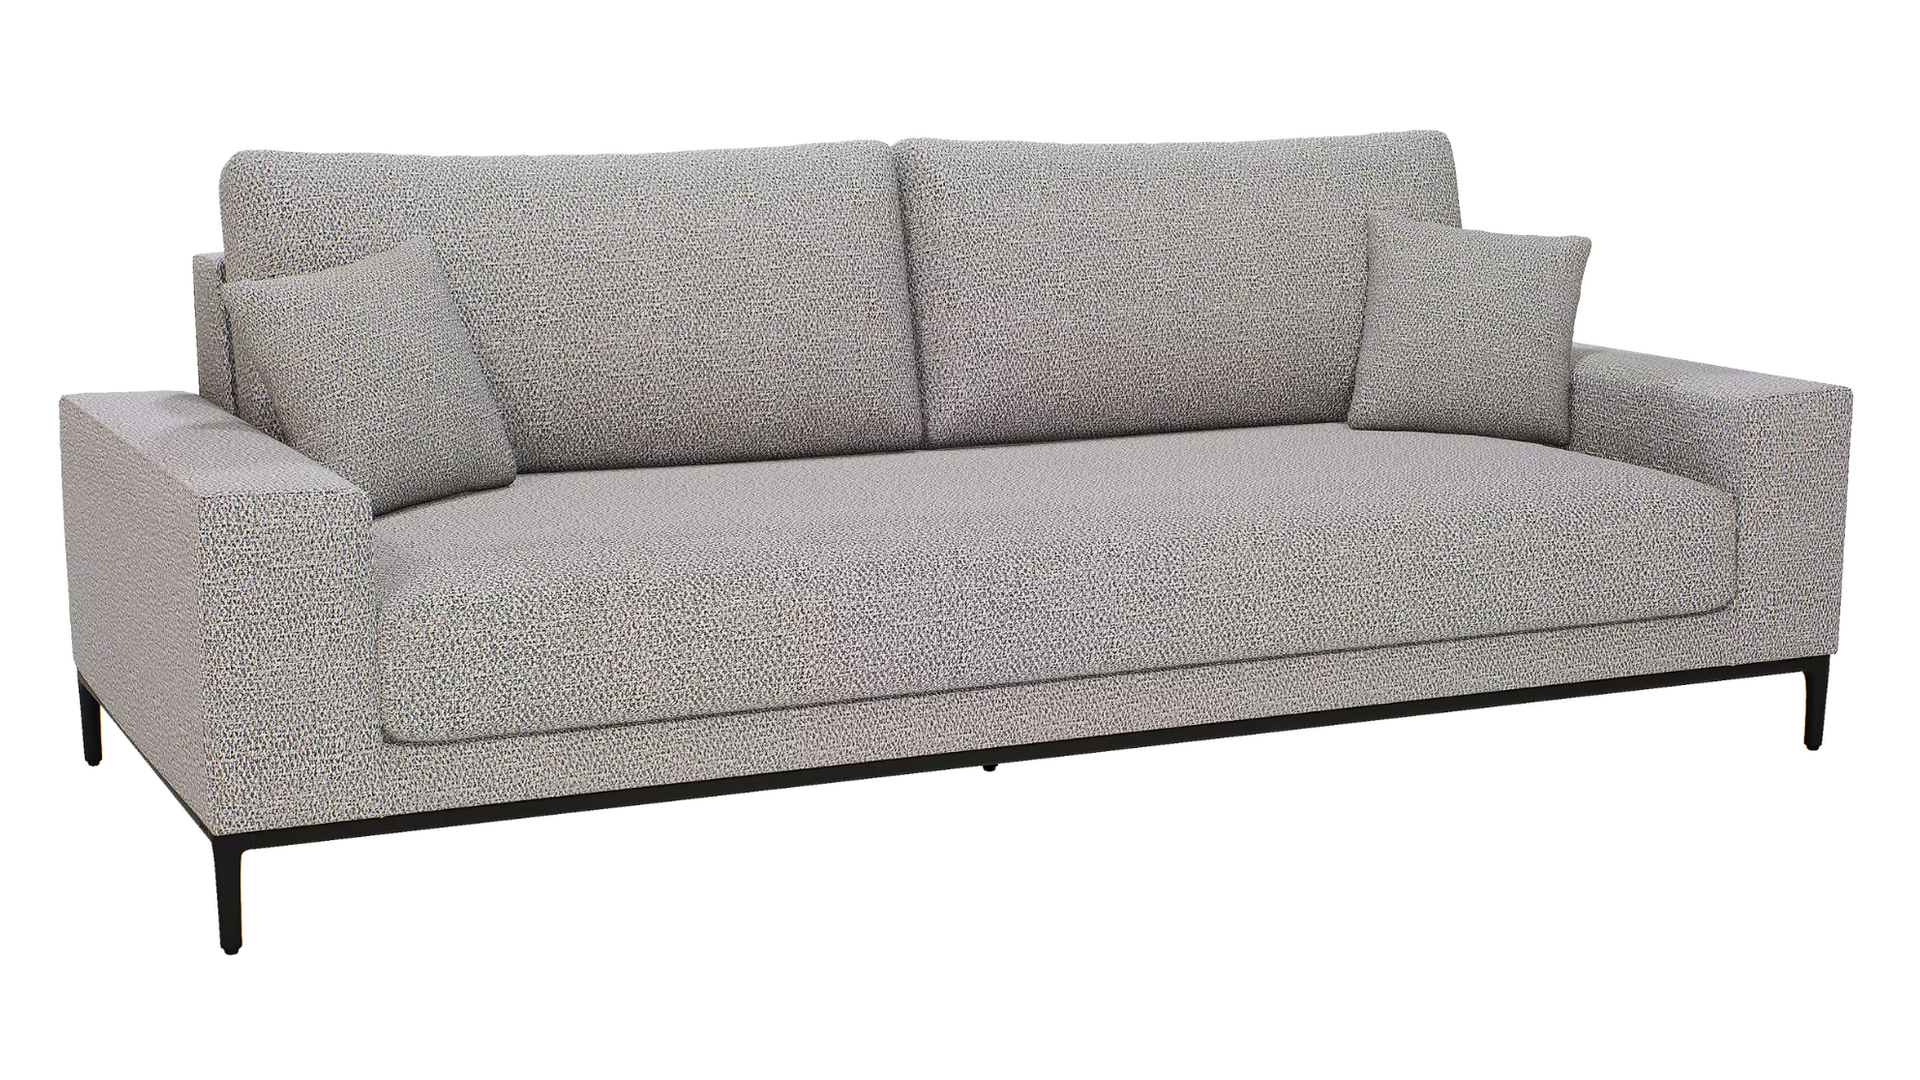 Manutti Zendo Sense 2,5 seater sofa 2-zits bank outdoor HORA Barneveld 2.png